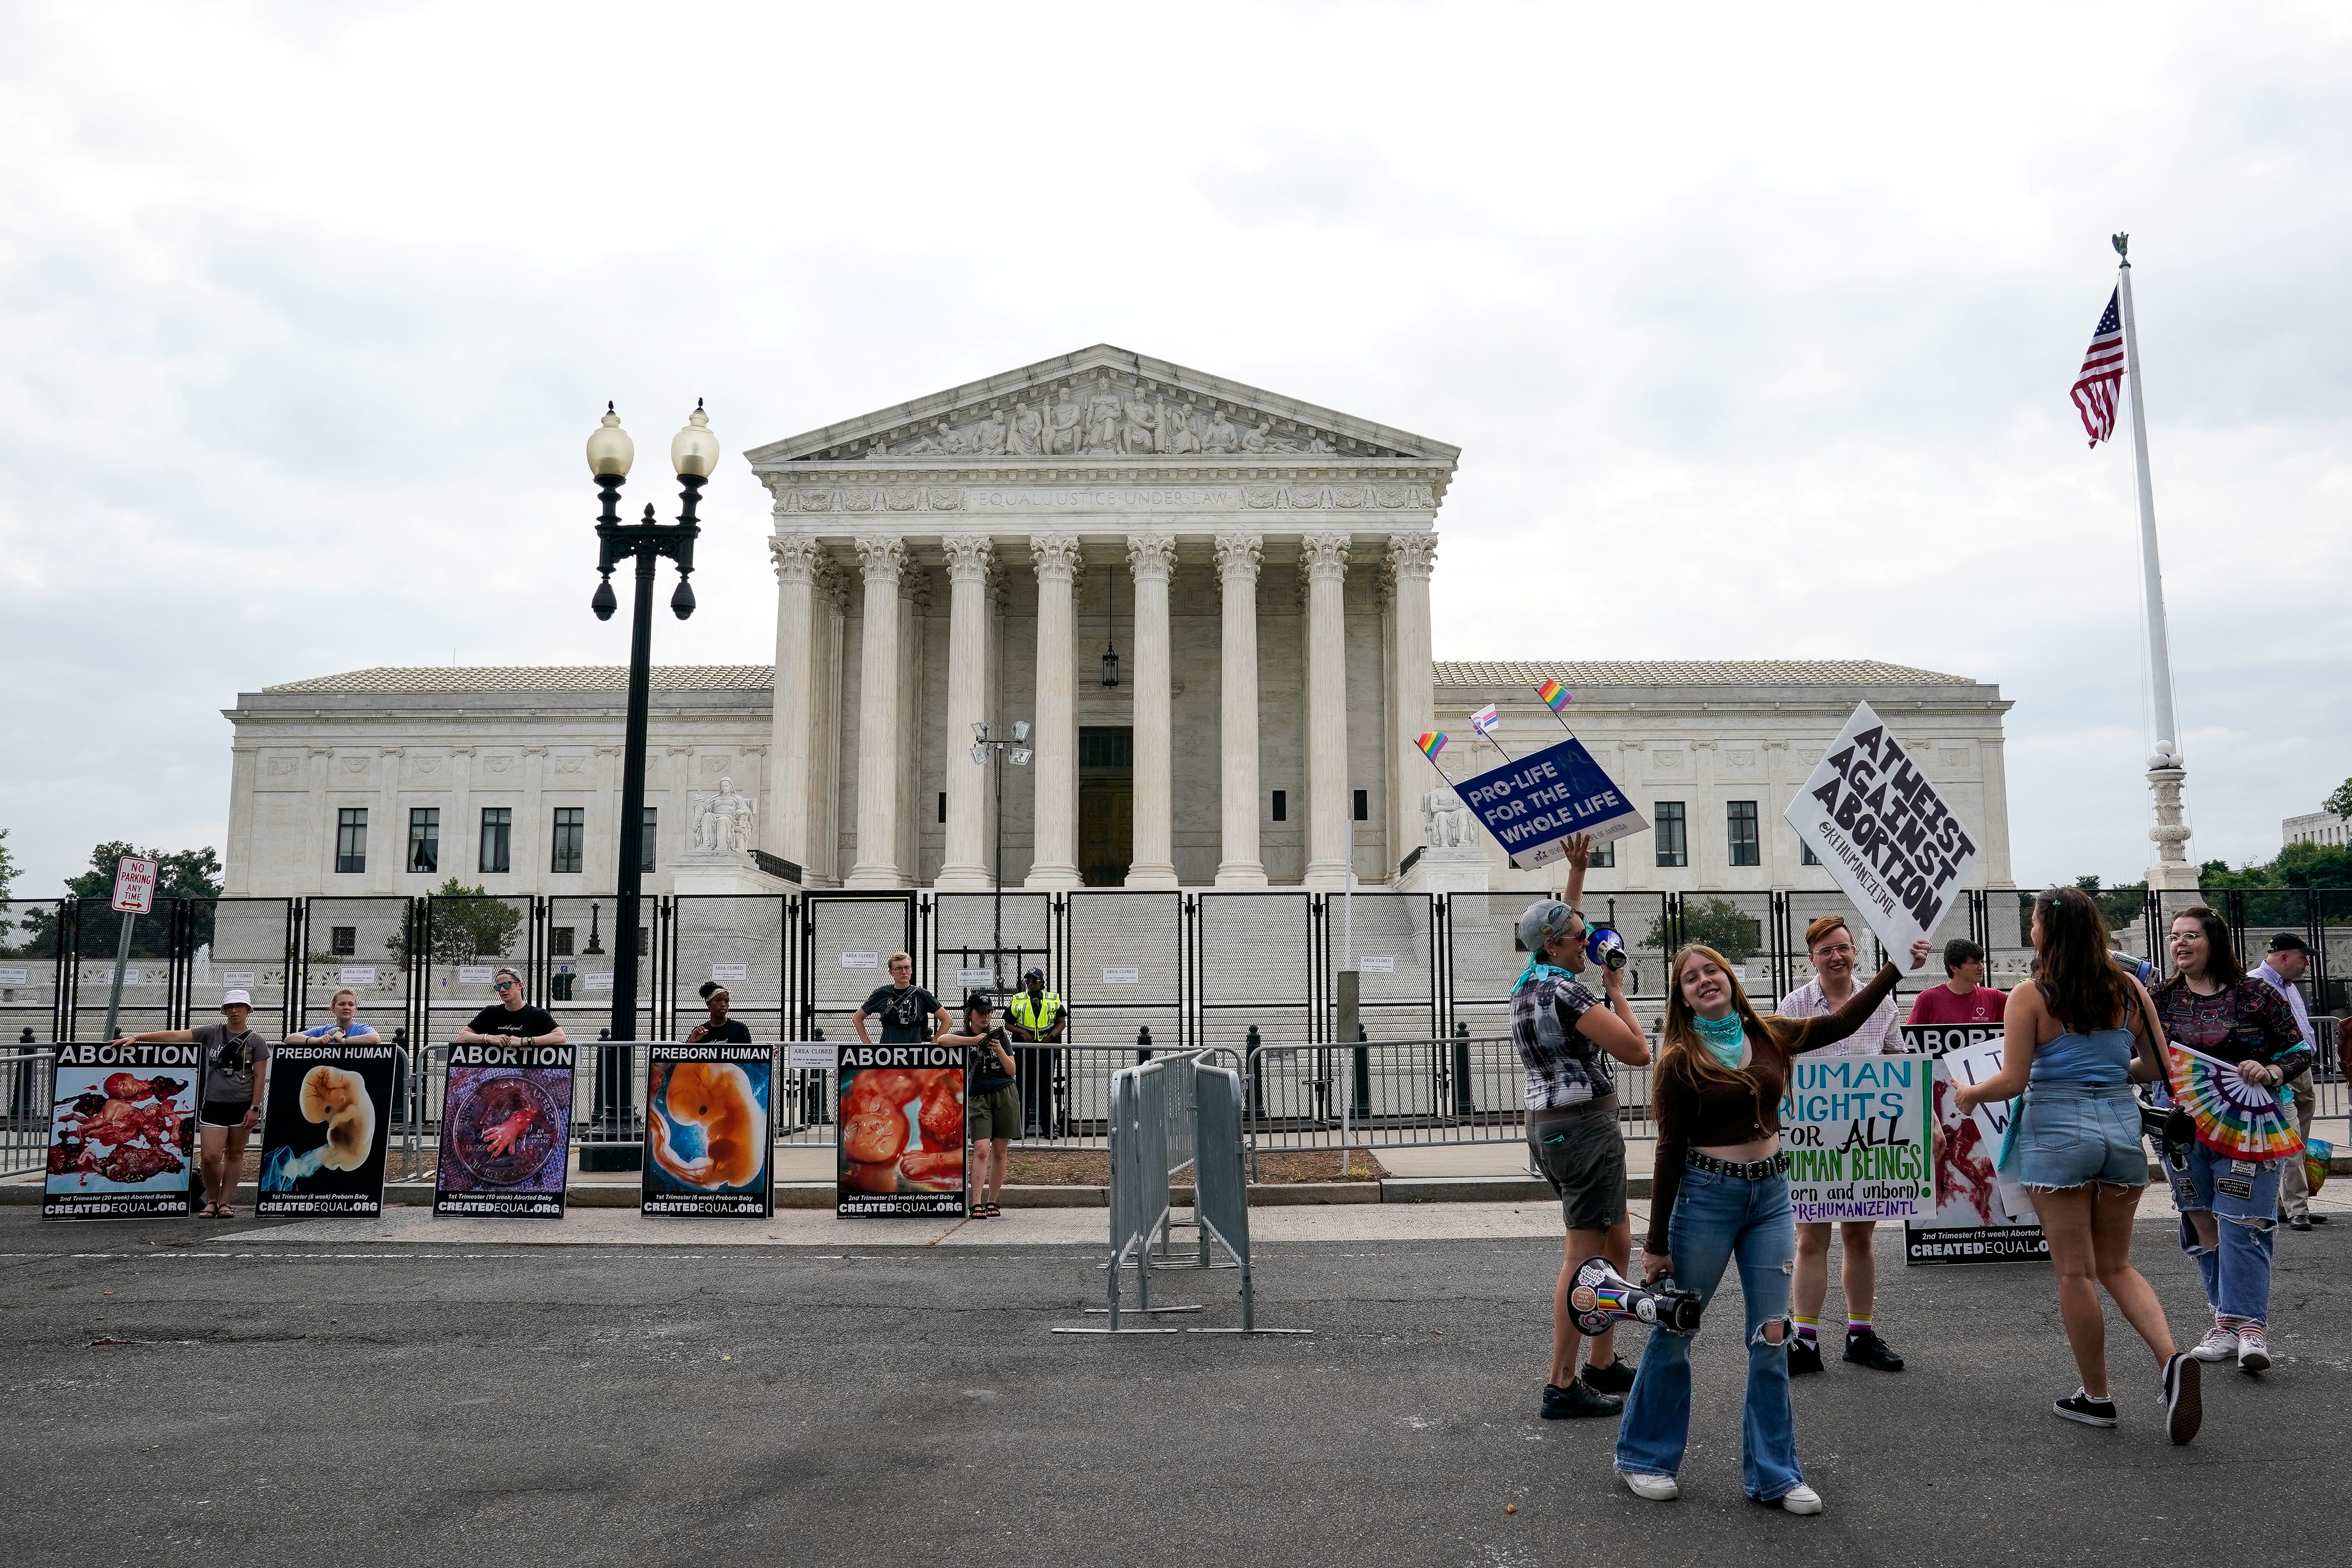 United States Supreme Court overturns the landmark Roe v Wade abortion decision